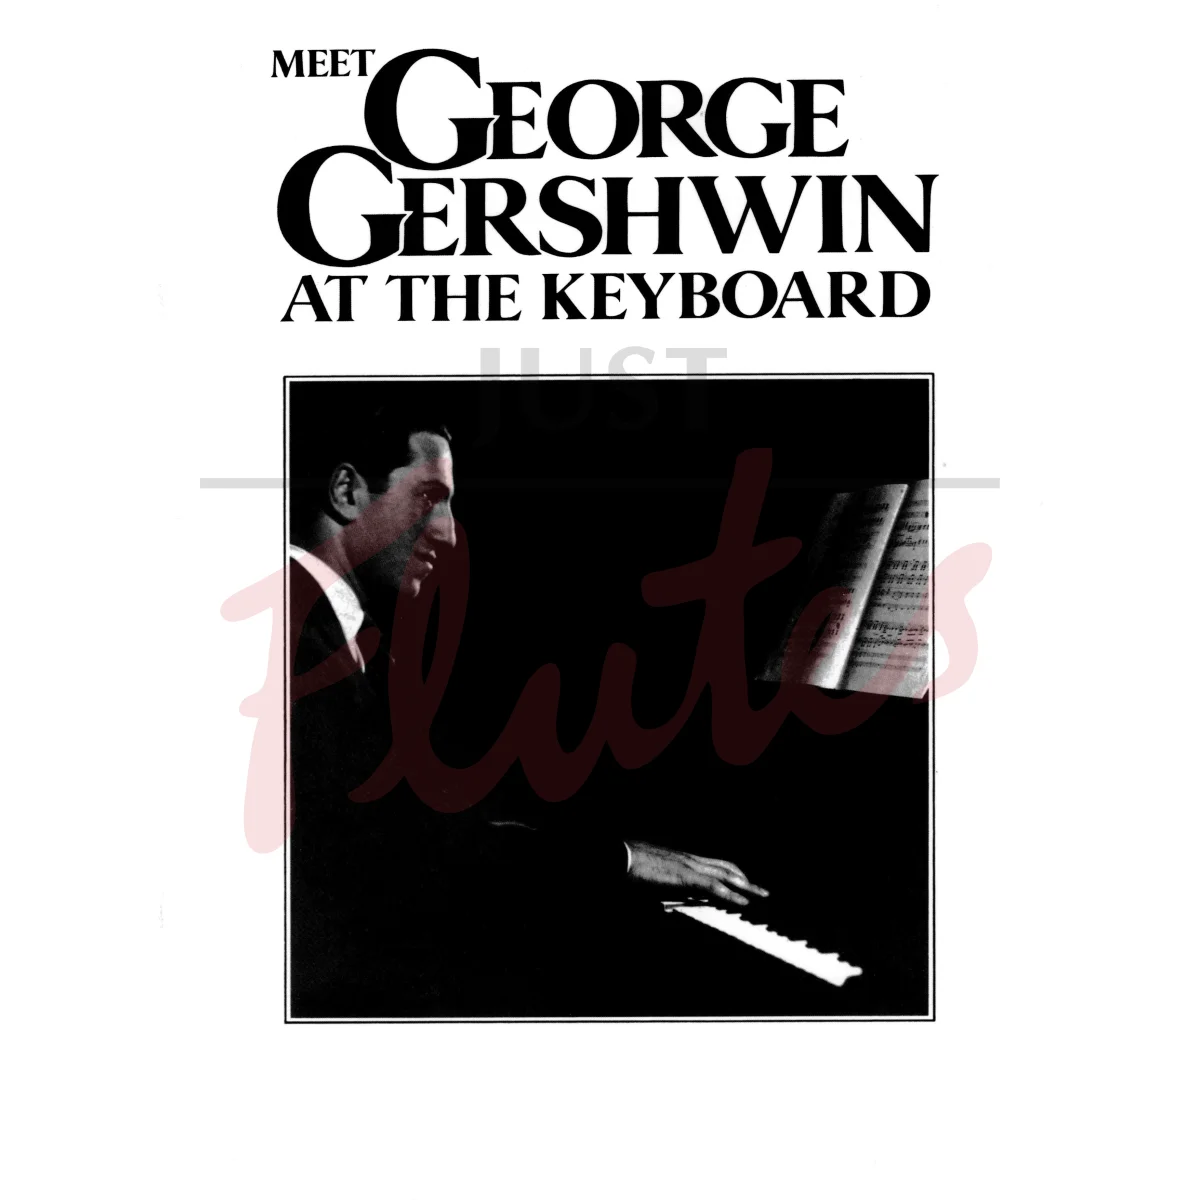 Meet George Gershwin at the Keyboard